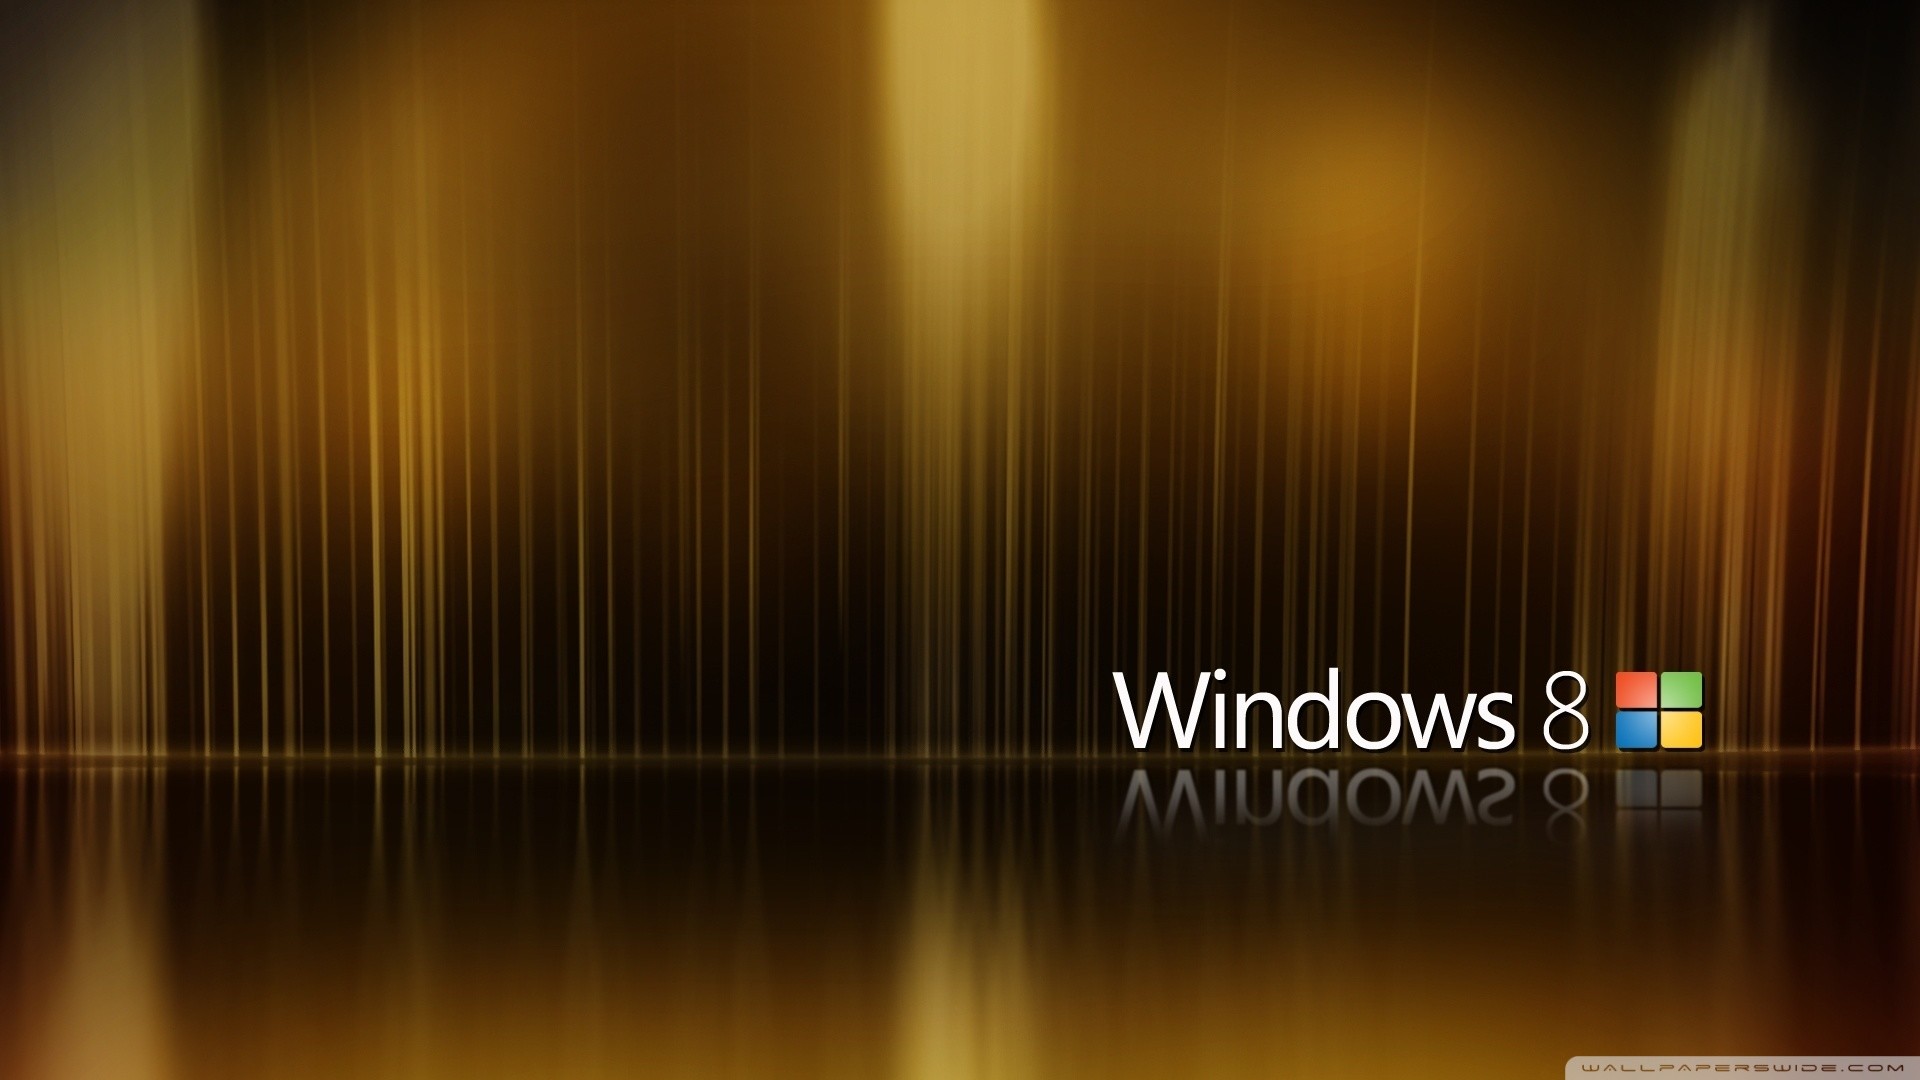 Windows HD Wallpaper 1920x1080 (67+ images)